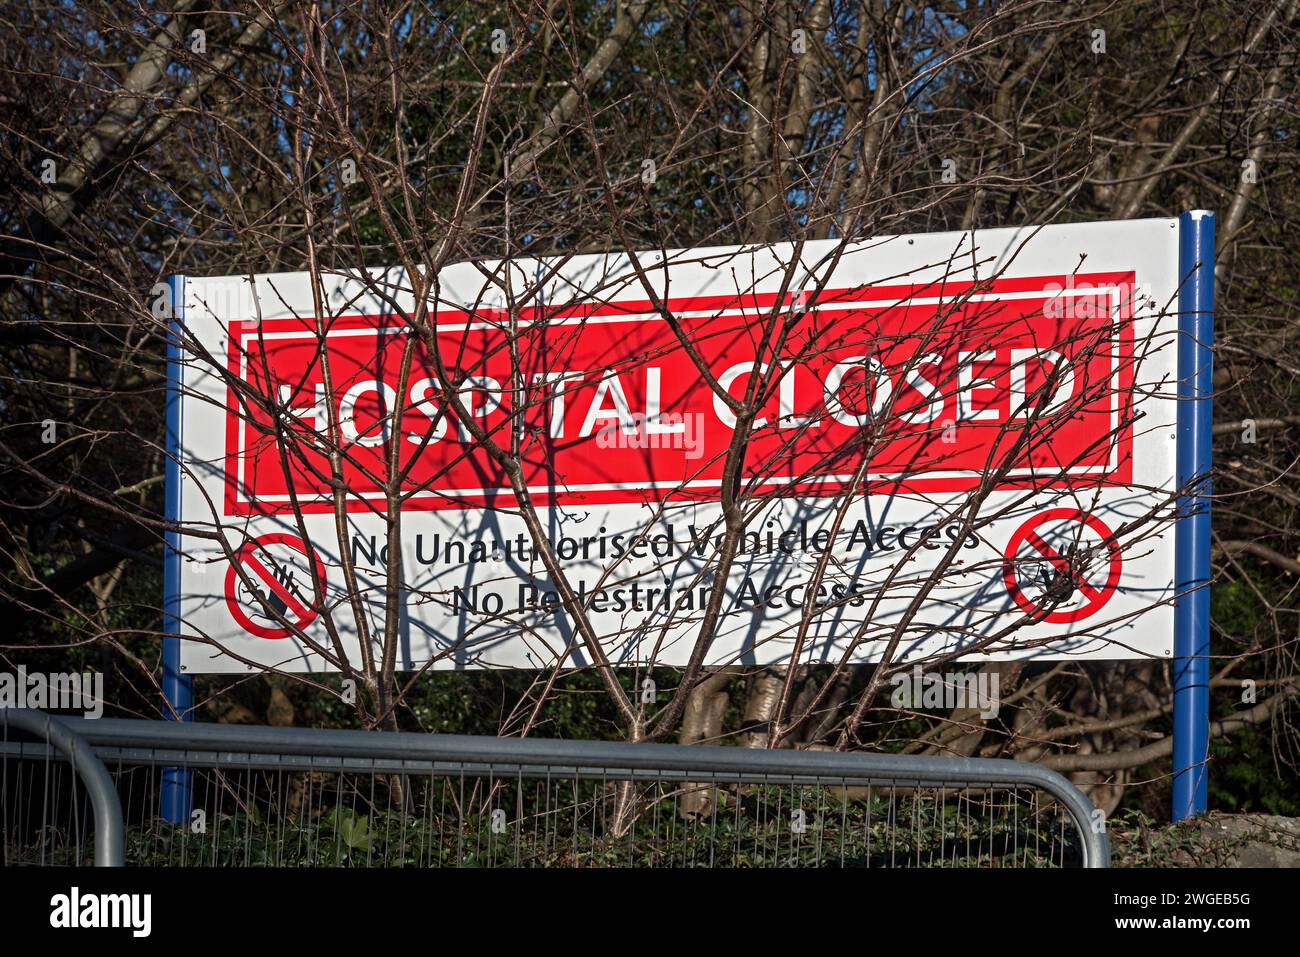 Hospital Closed sign outside the old disused Royal Victoria Hospital entrance on Craigleith Road, Edinburgh, Scotland, UK. Stock Photo